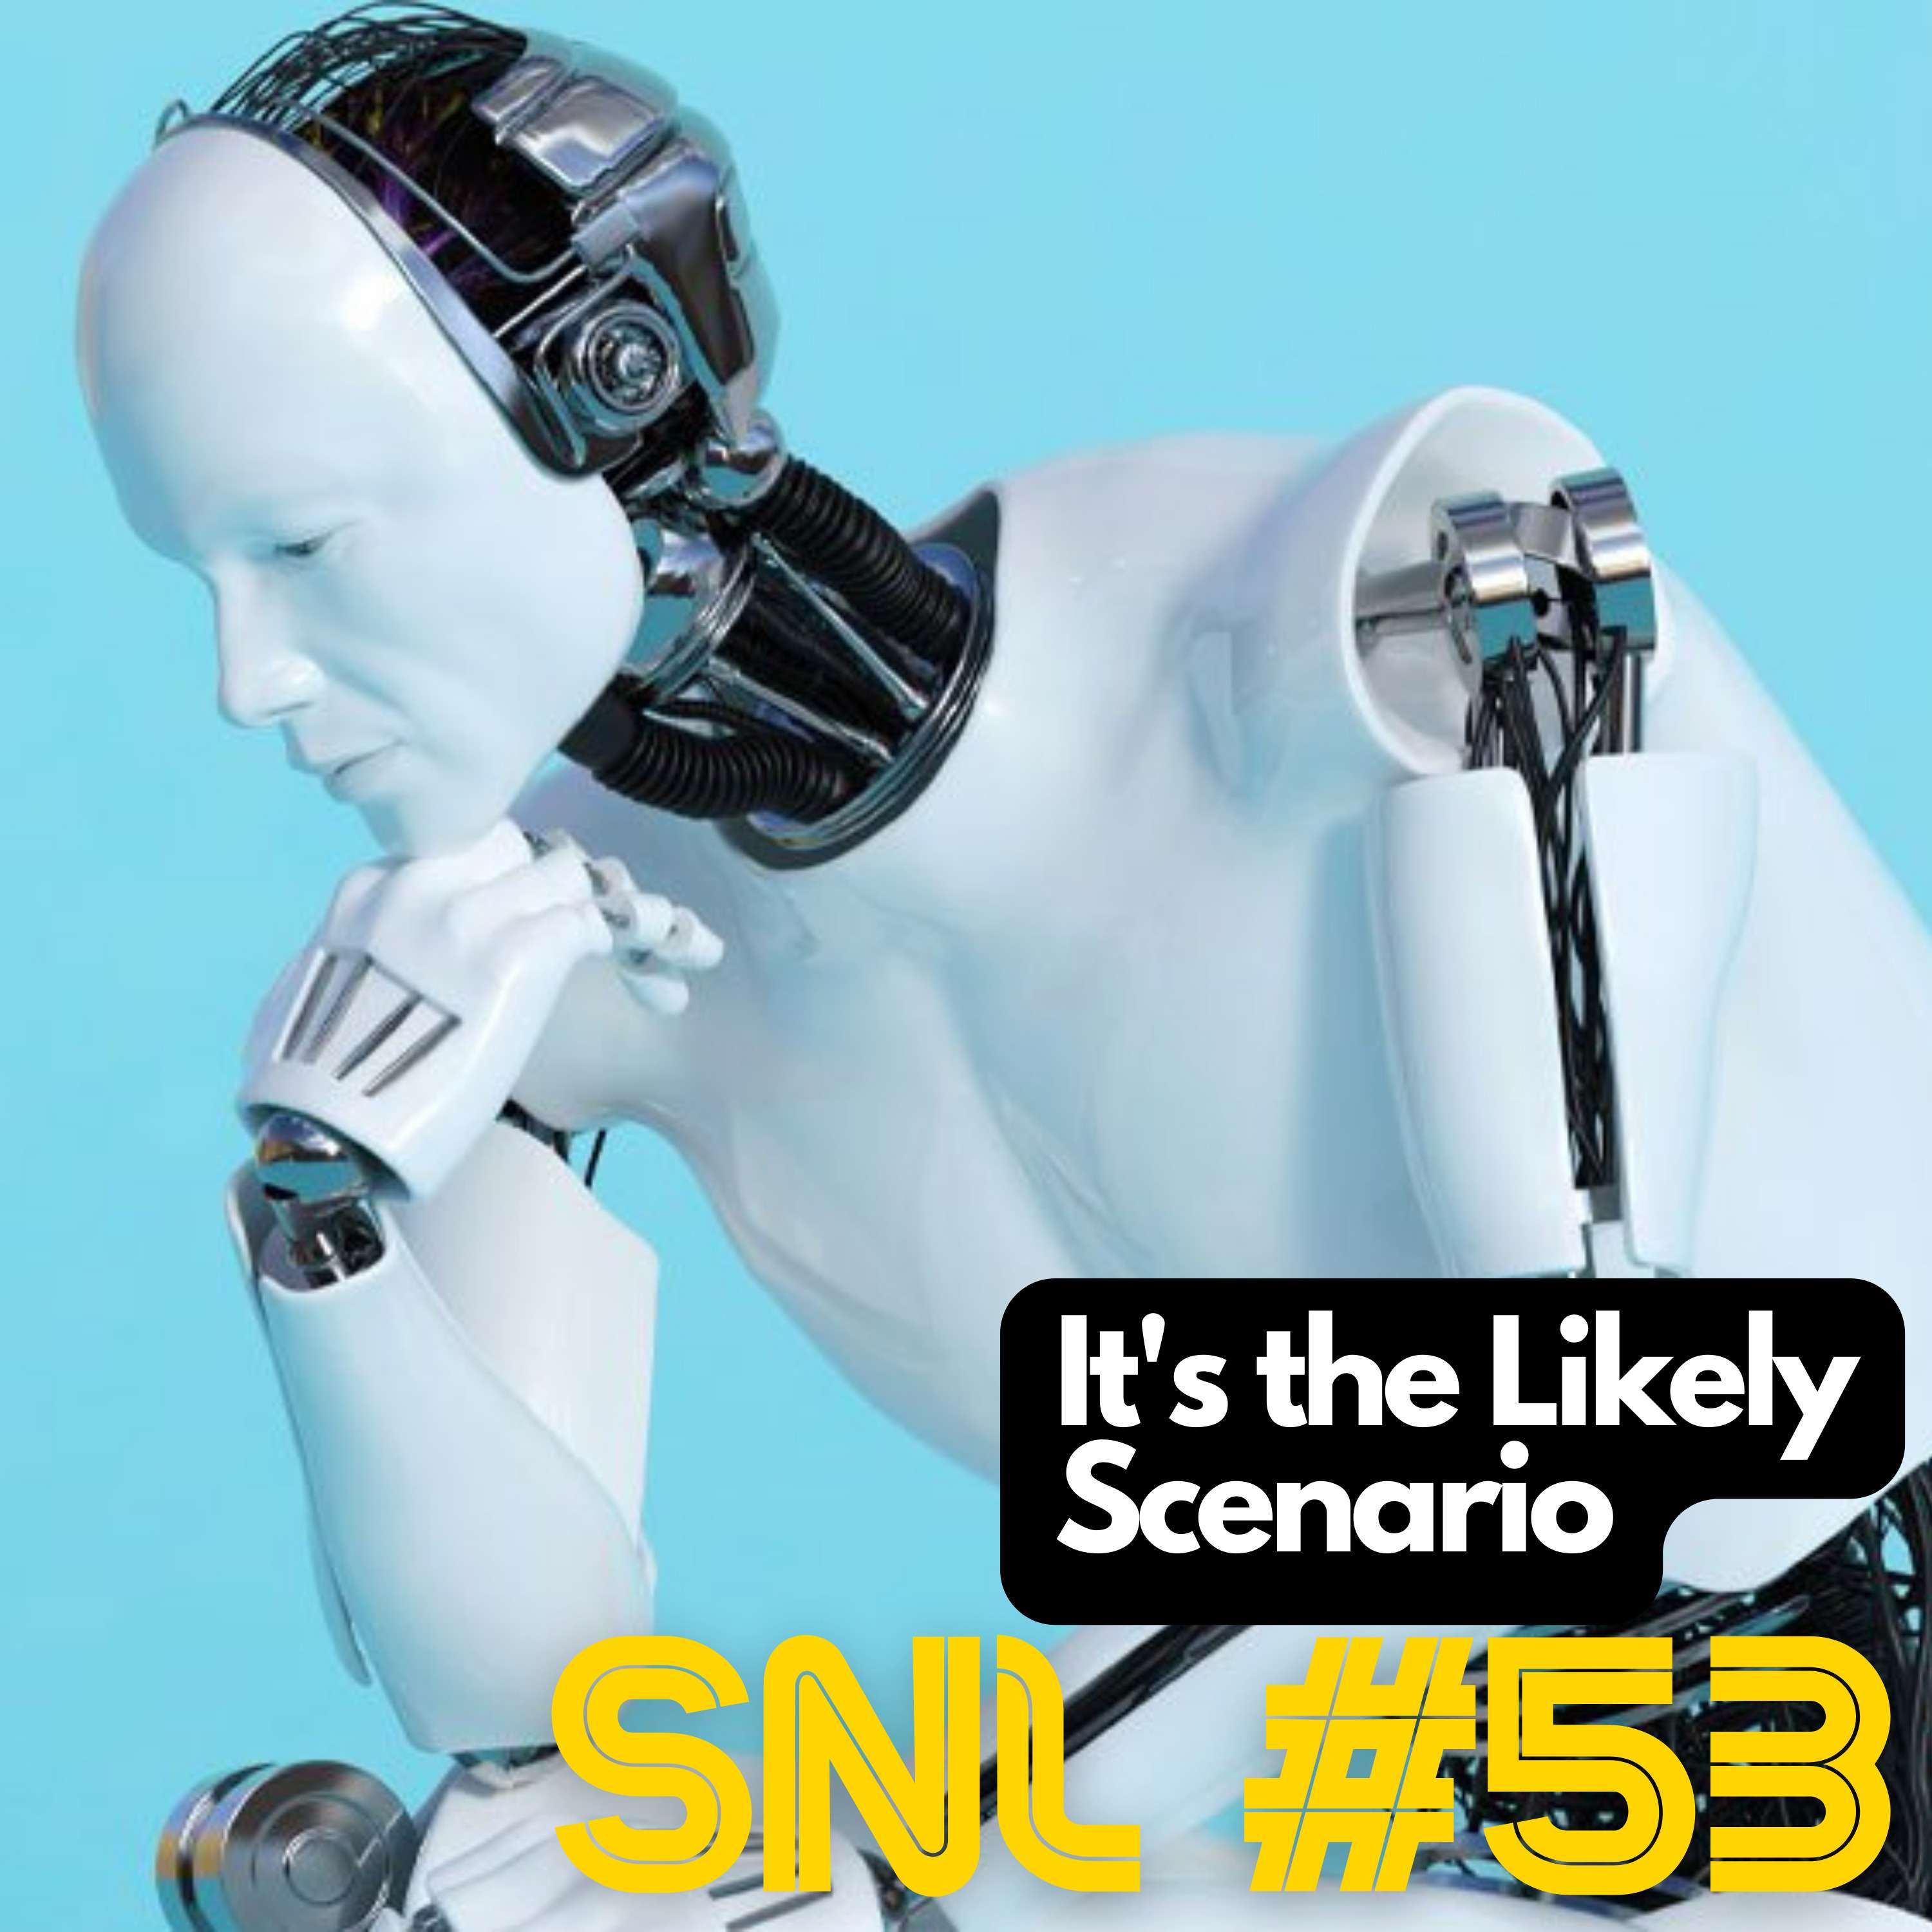 SNL #53: It's the likely scenario